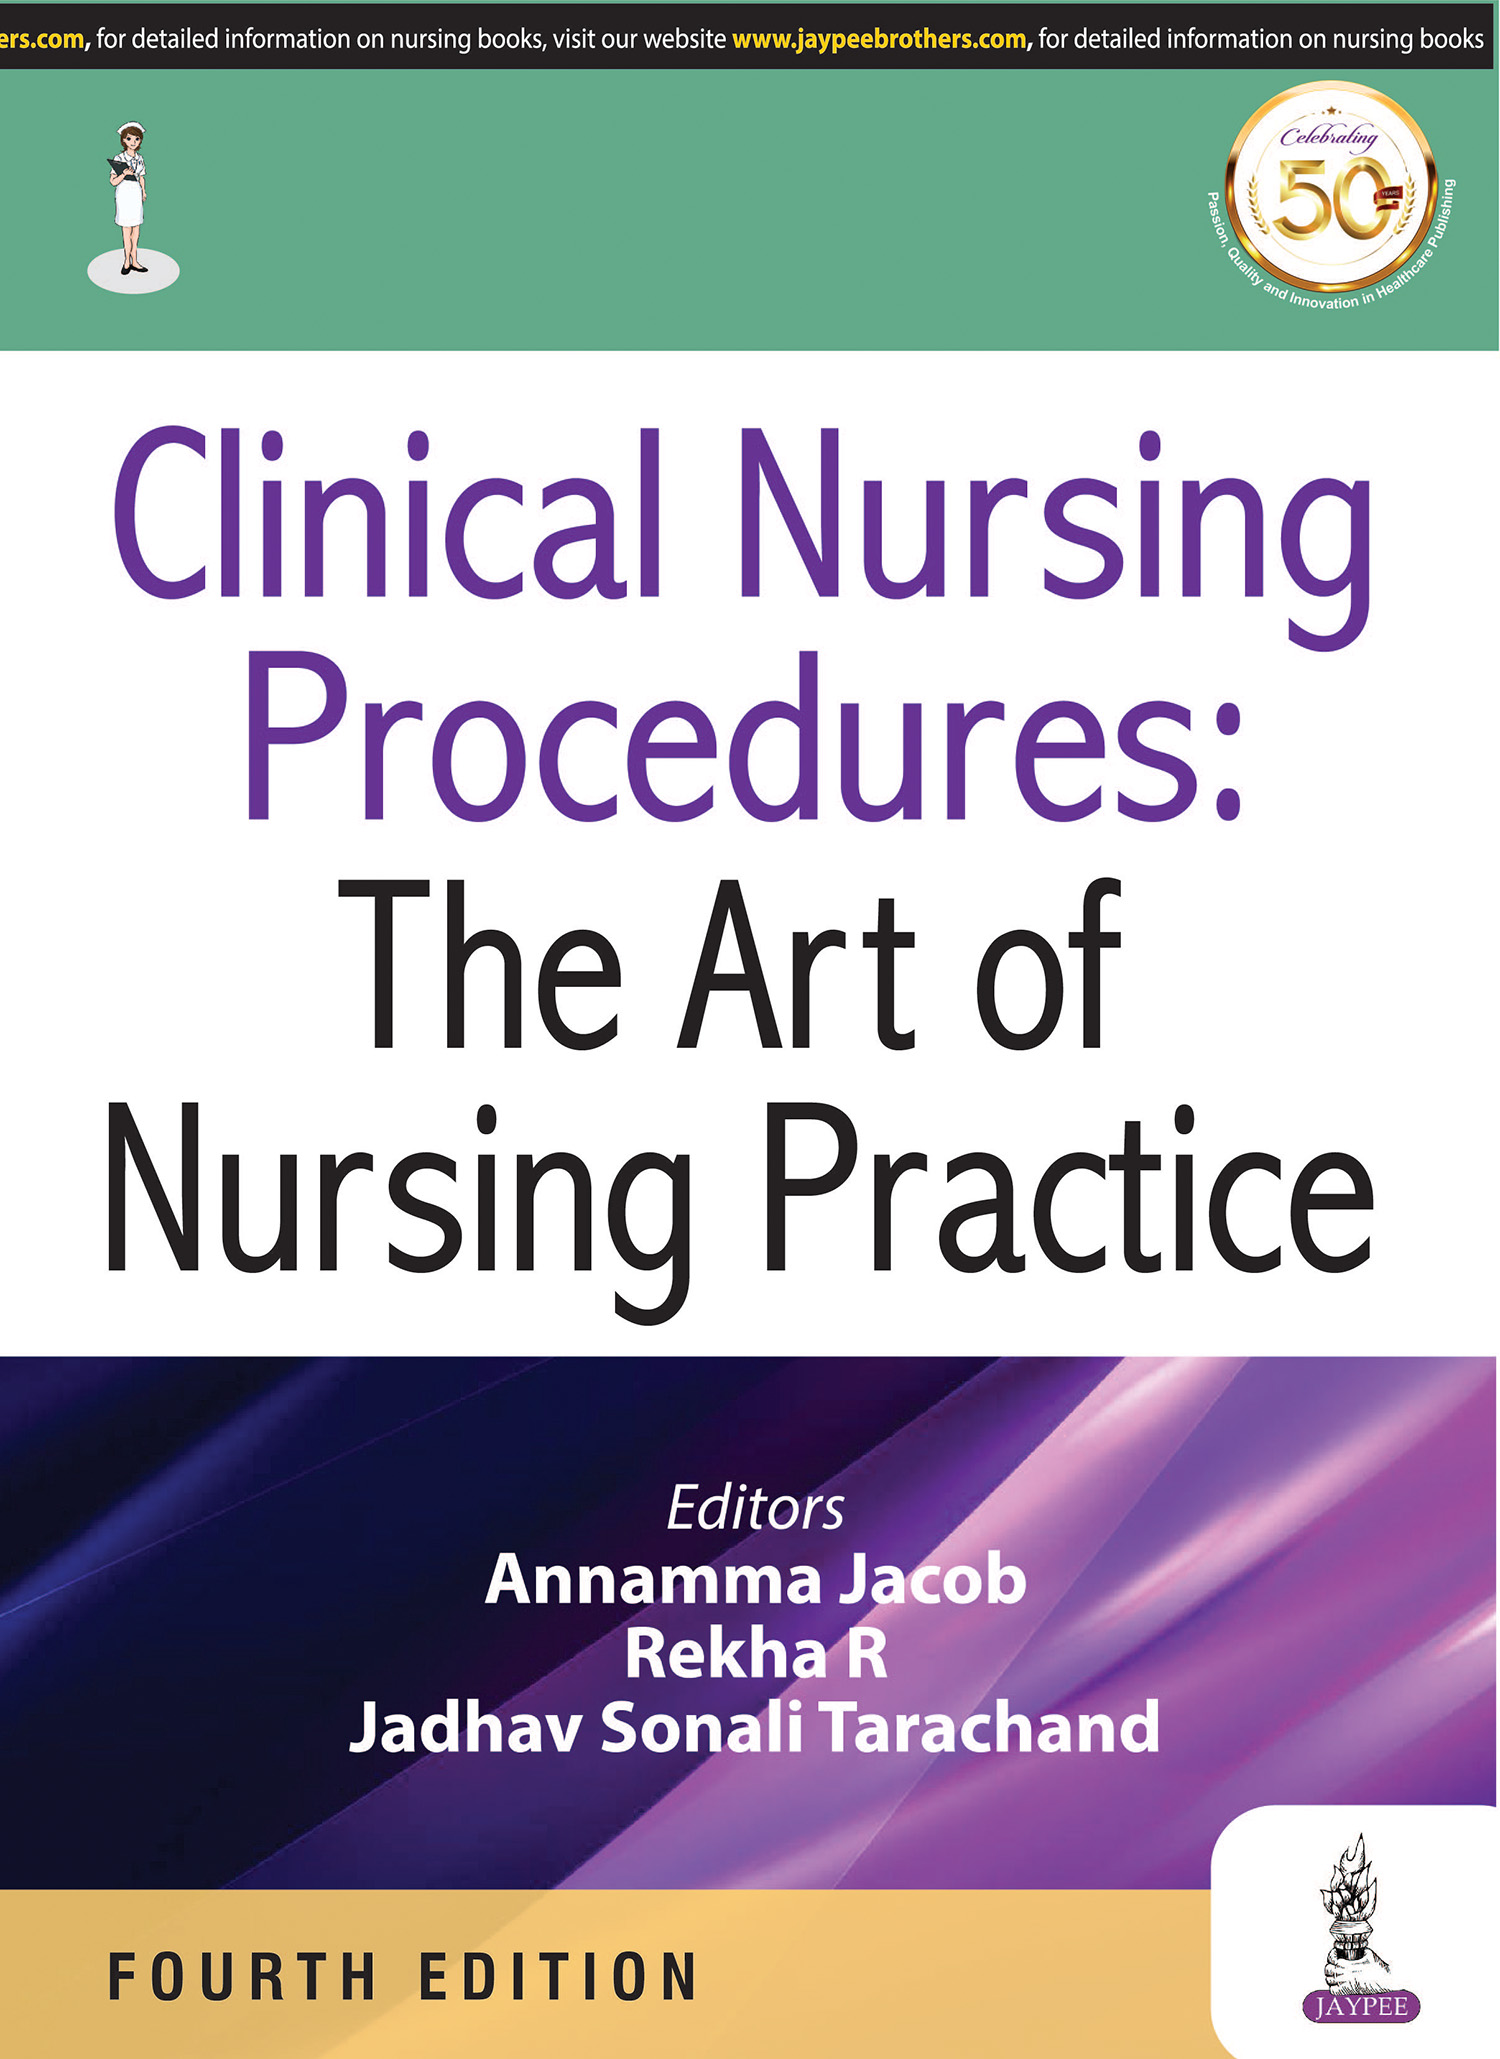 Clinical Nursing Procedures: The Art Of Nursing Practice